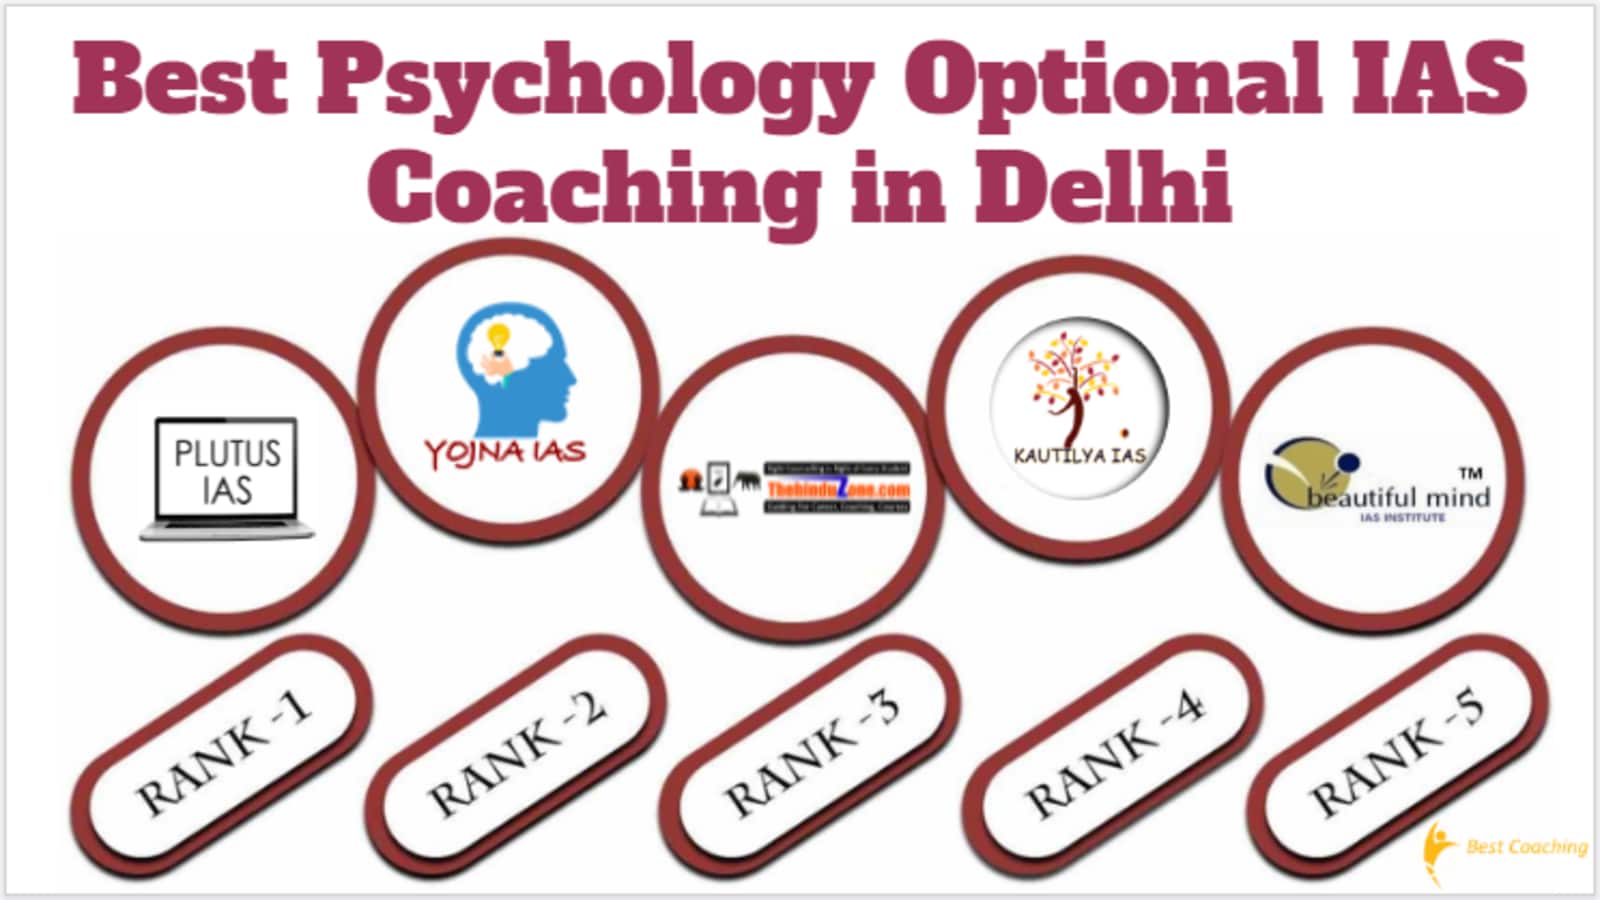 Top Psychology Optional IAS Coaching in Delhi